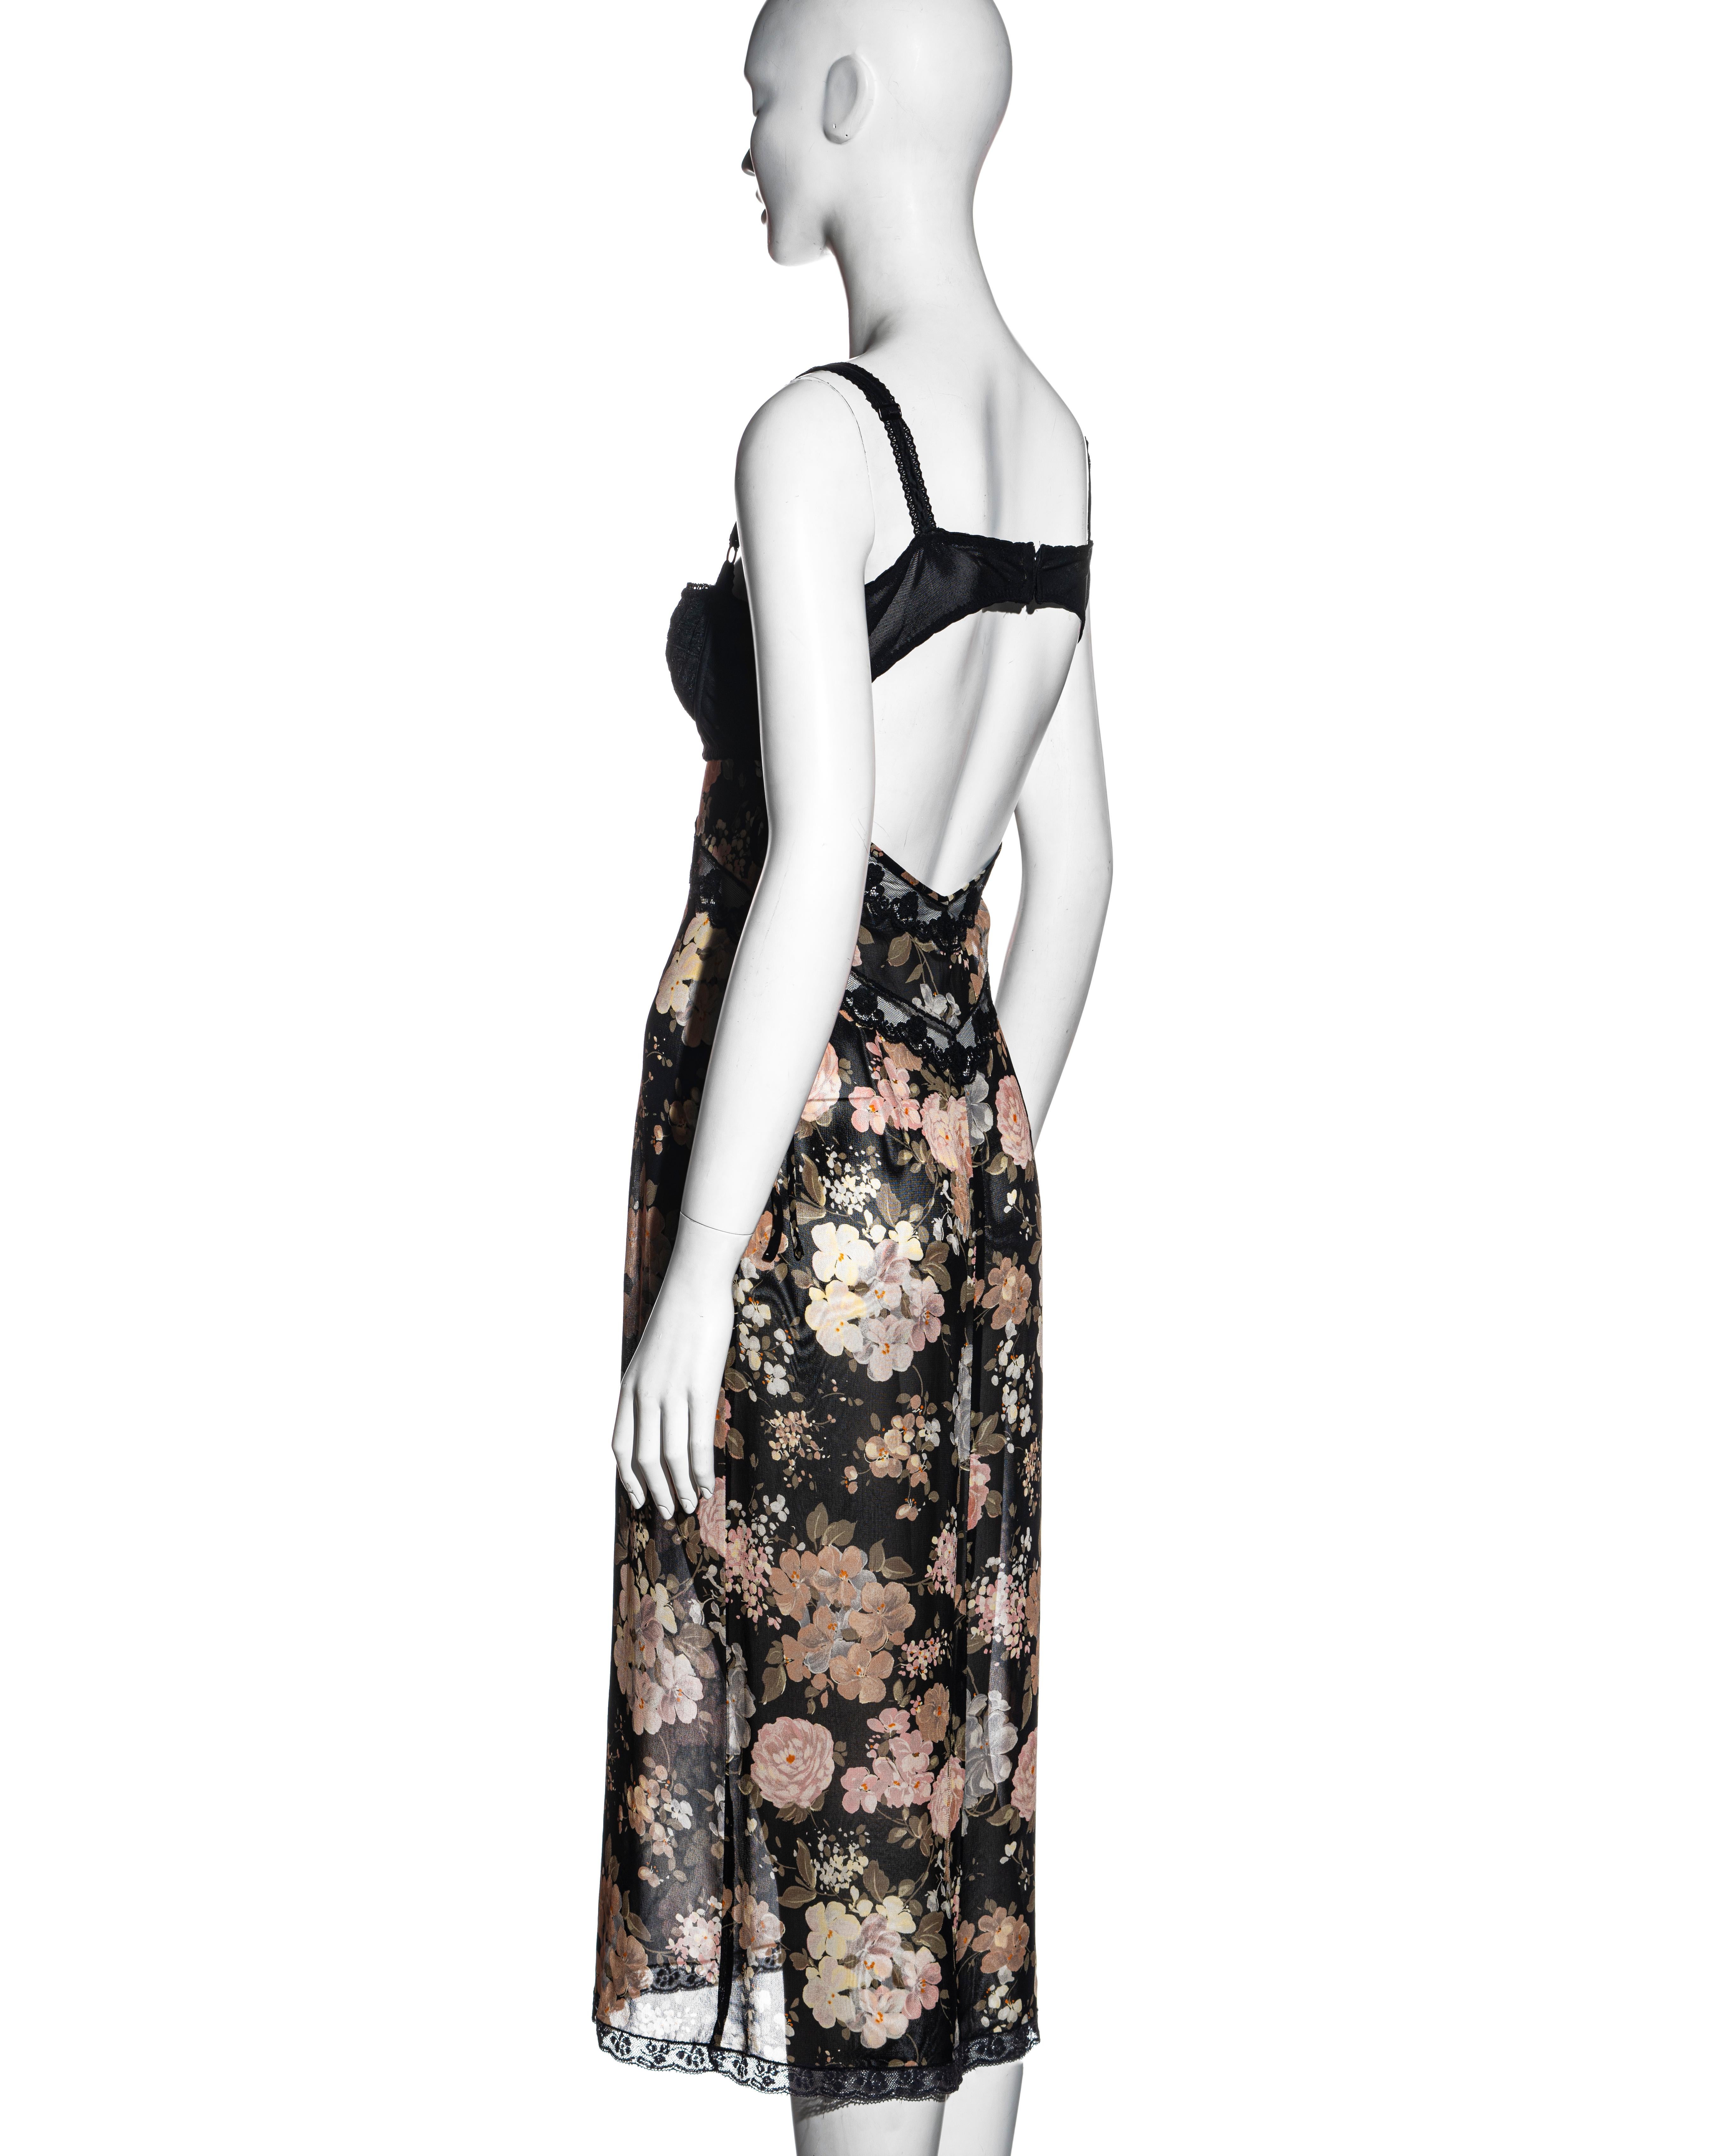 Dolce & Gabbana floral chiffon and lace evening slip dress, ss 1997 1